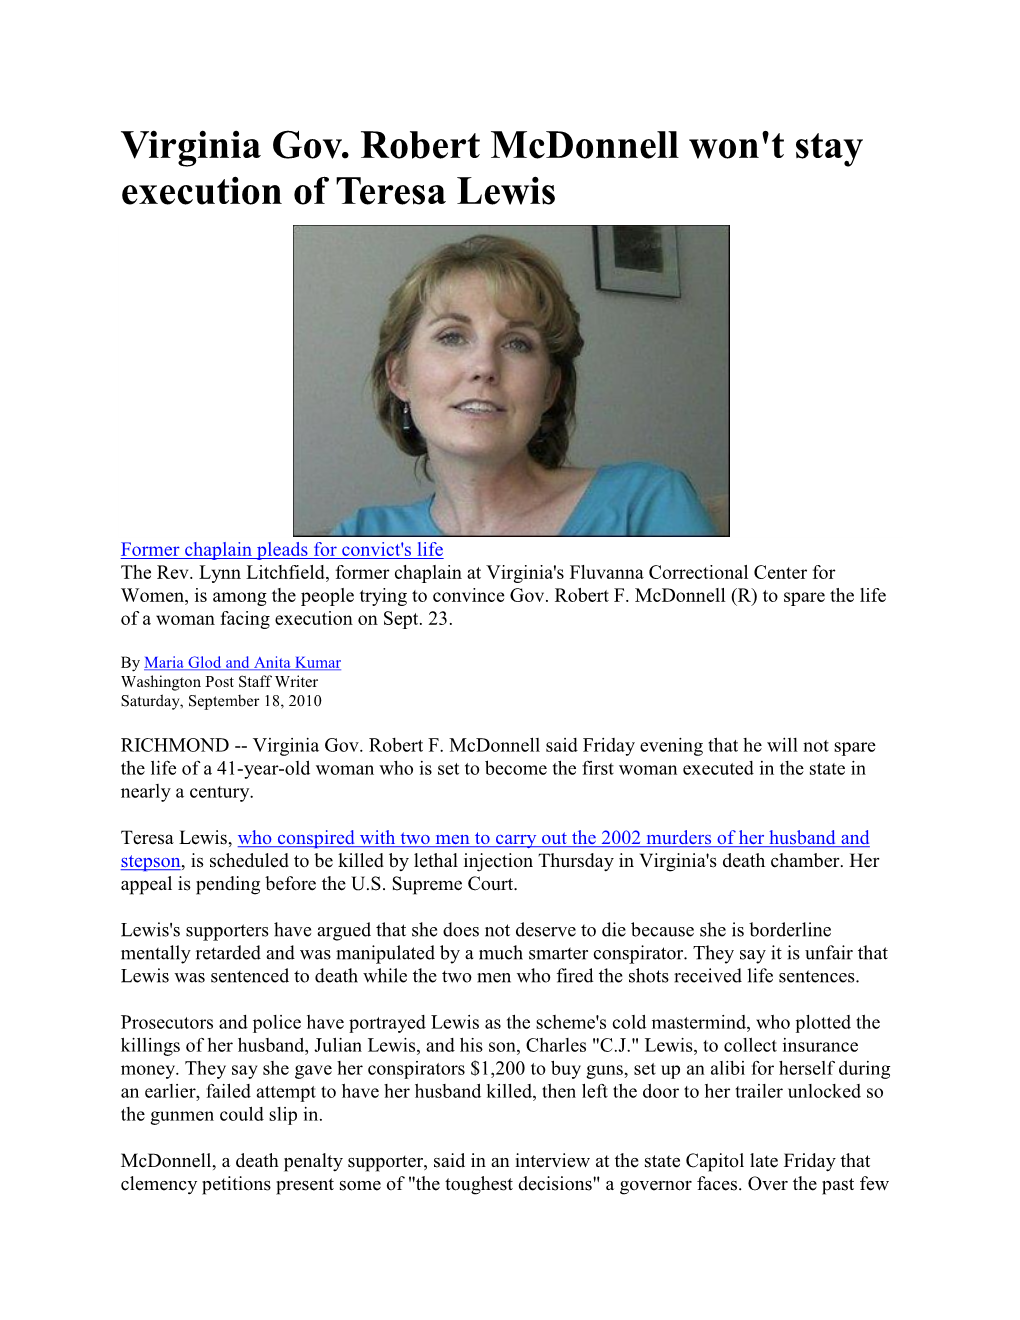 Virginia Gov. Robert Mcdonnell Won't Stay Execution of Teresa Lewis